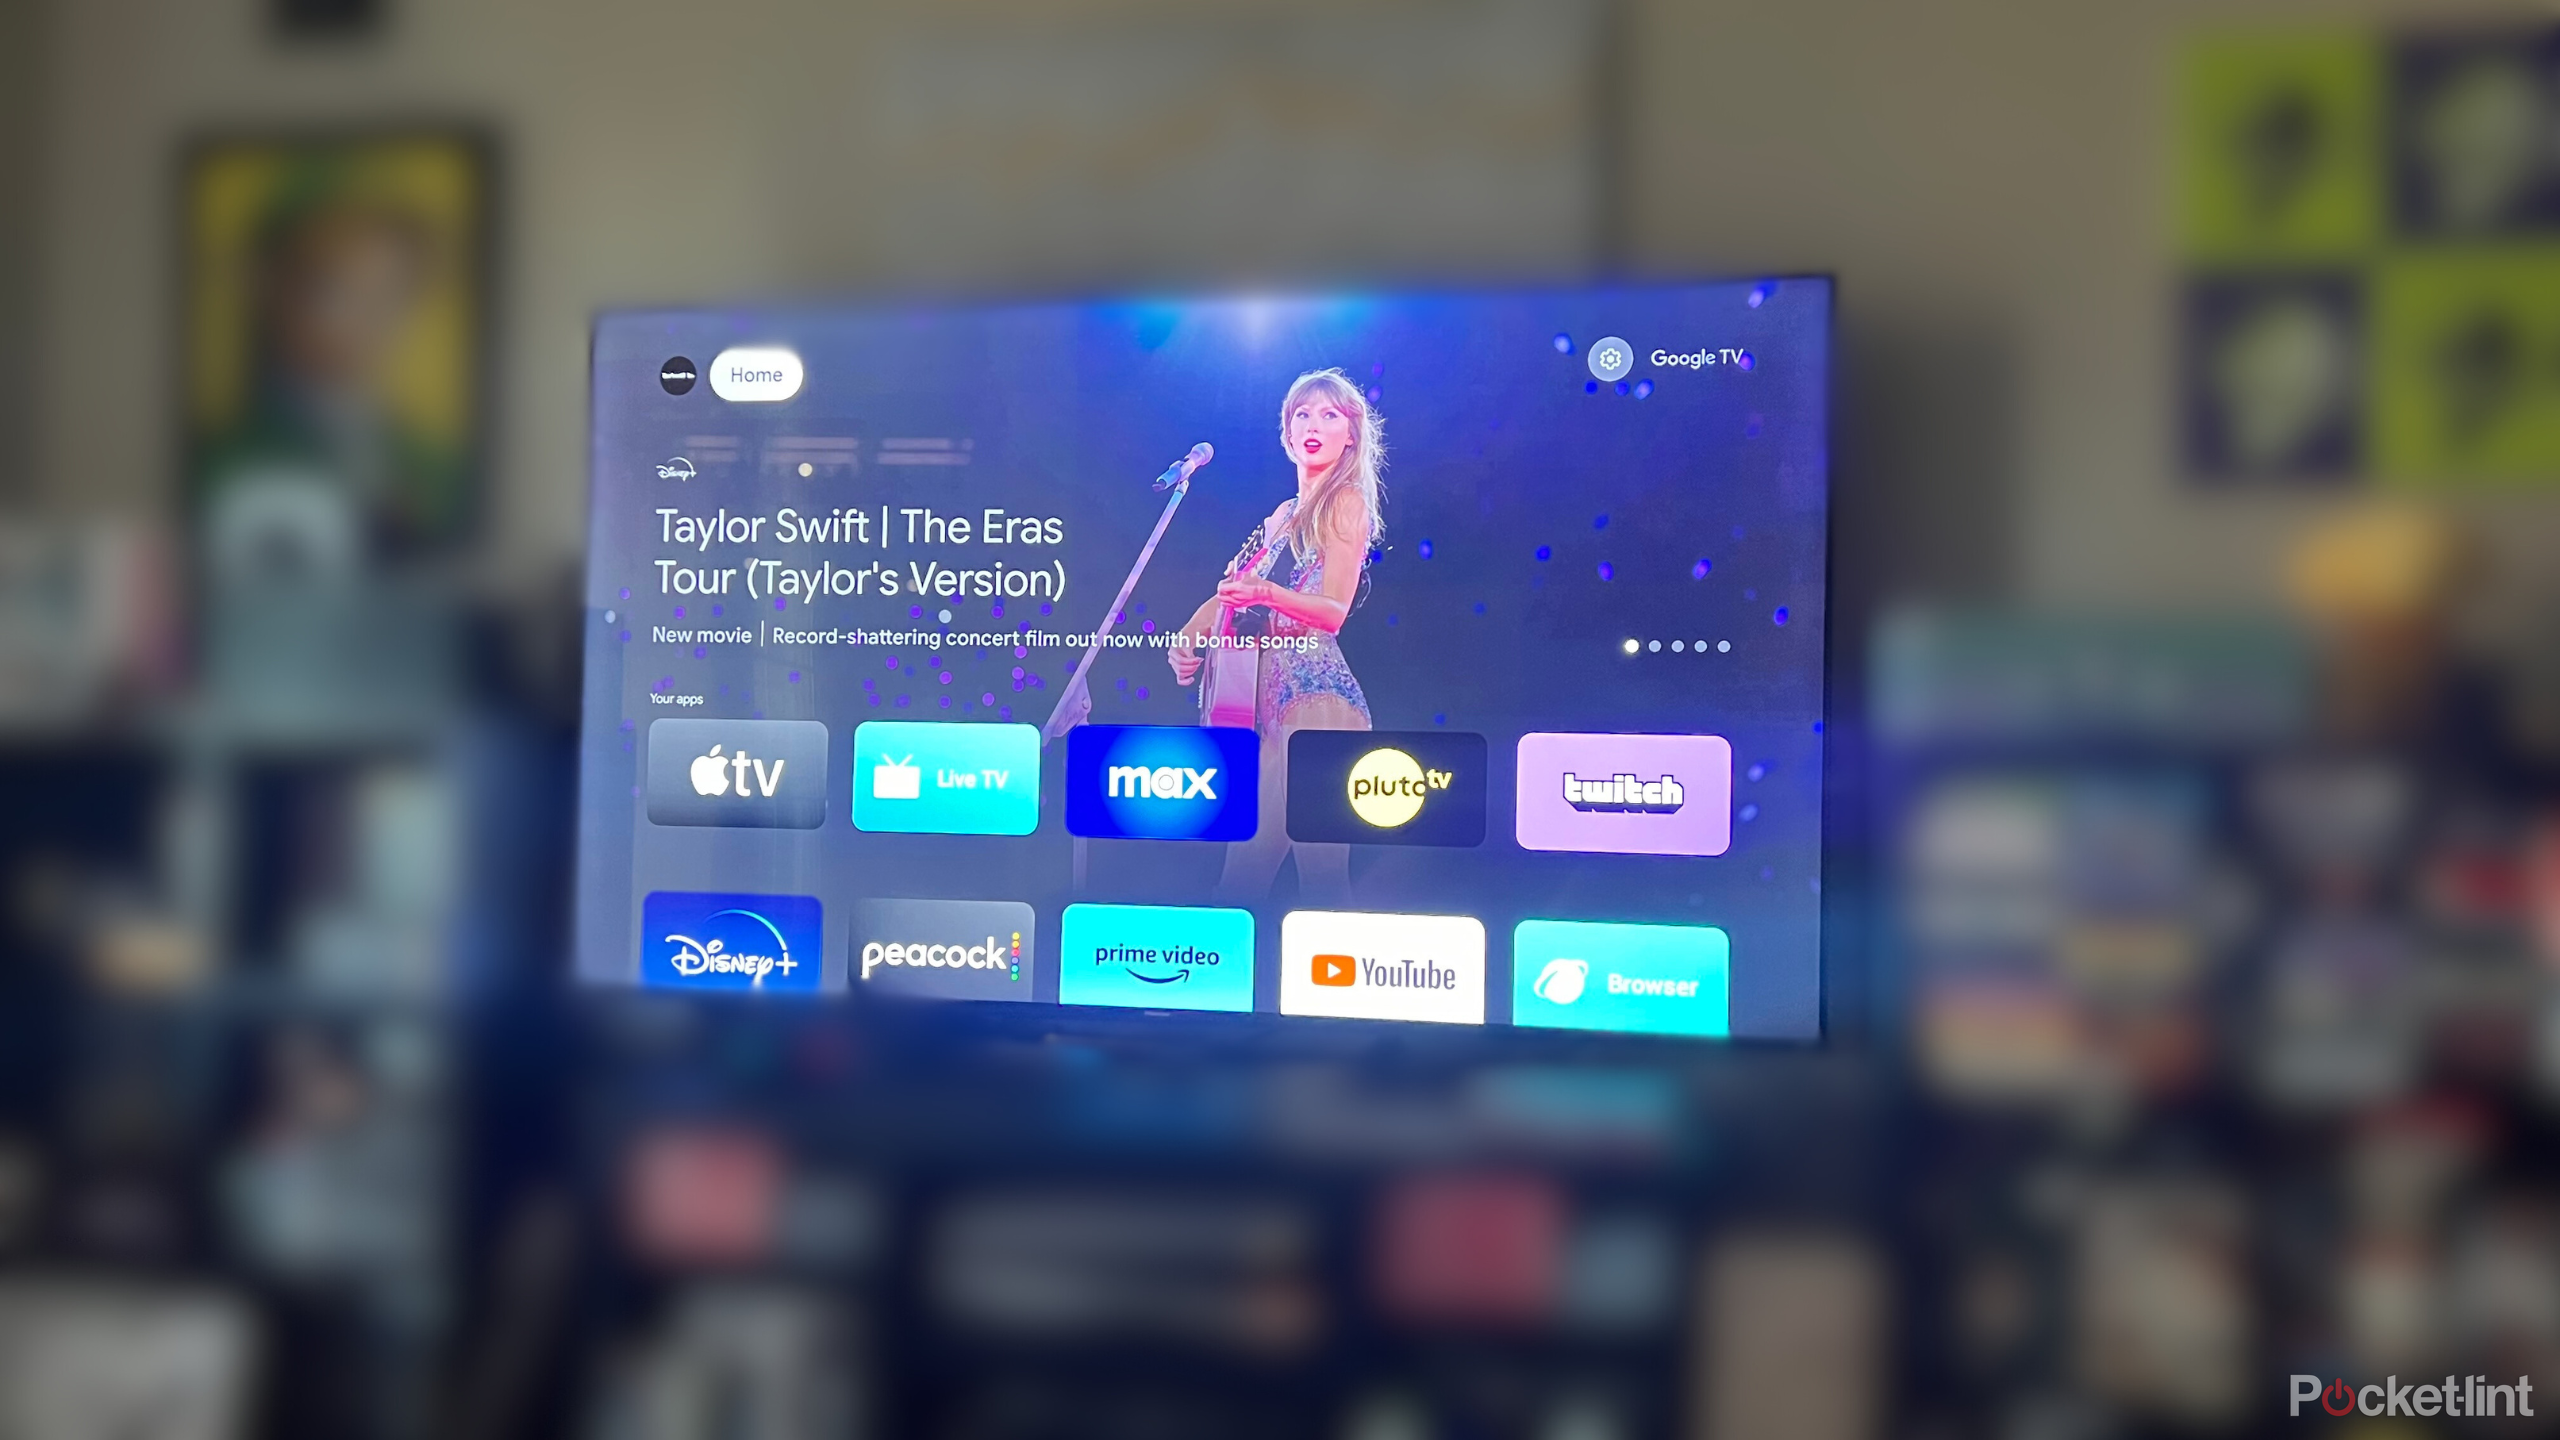 The Google TV interface.